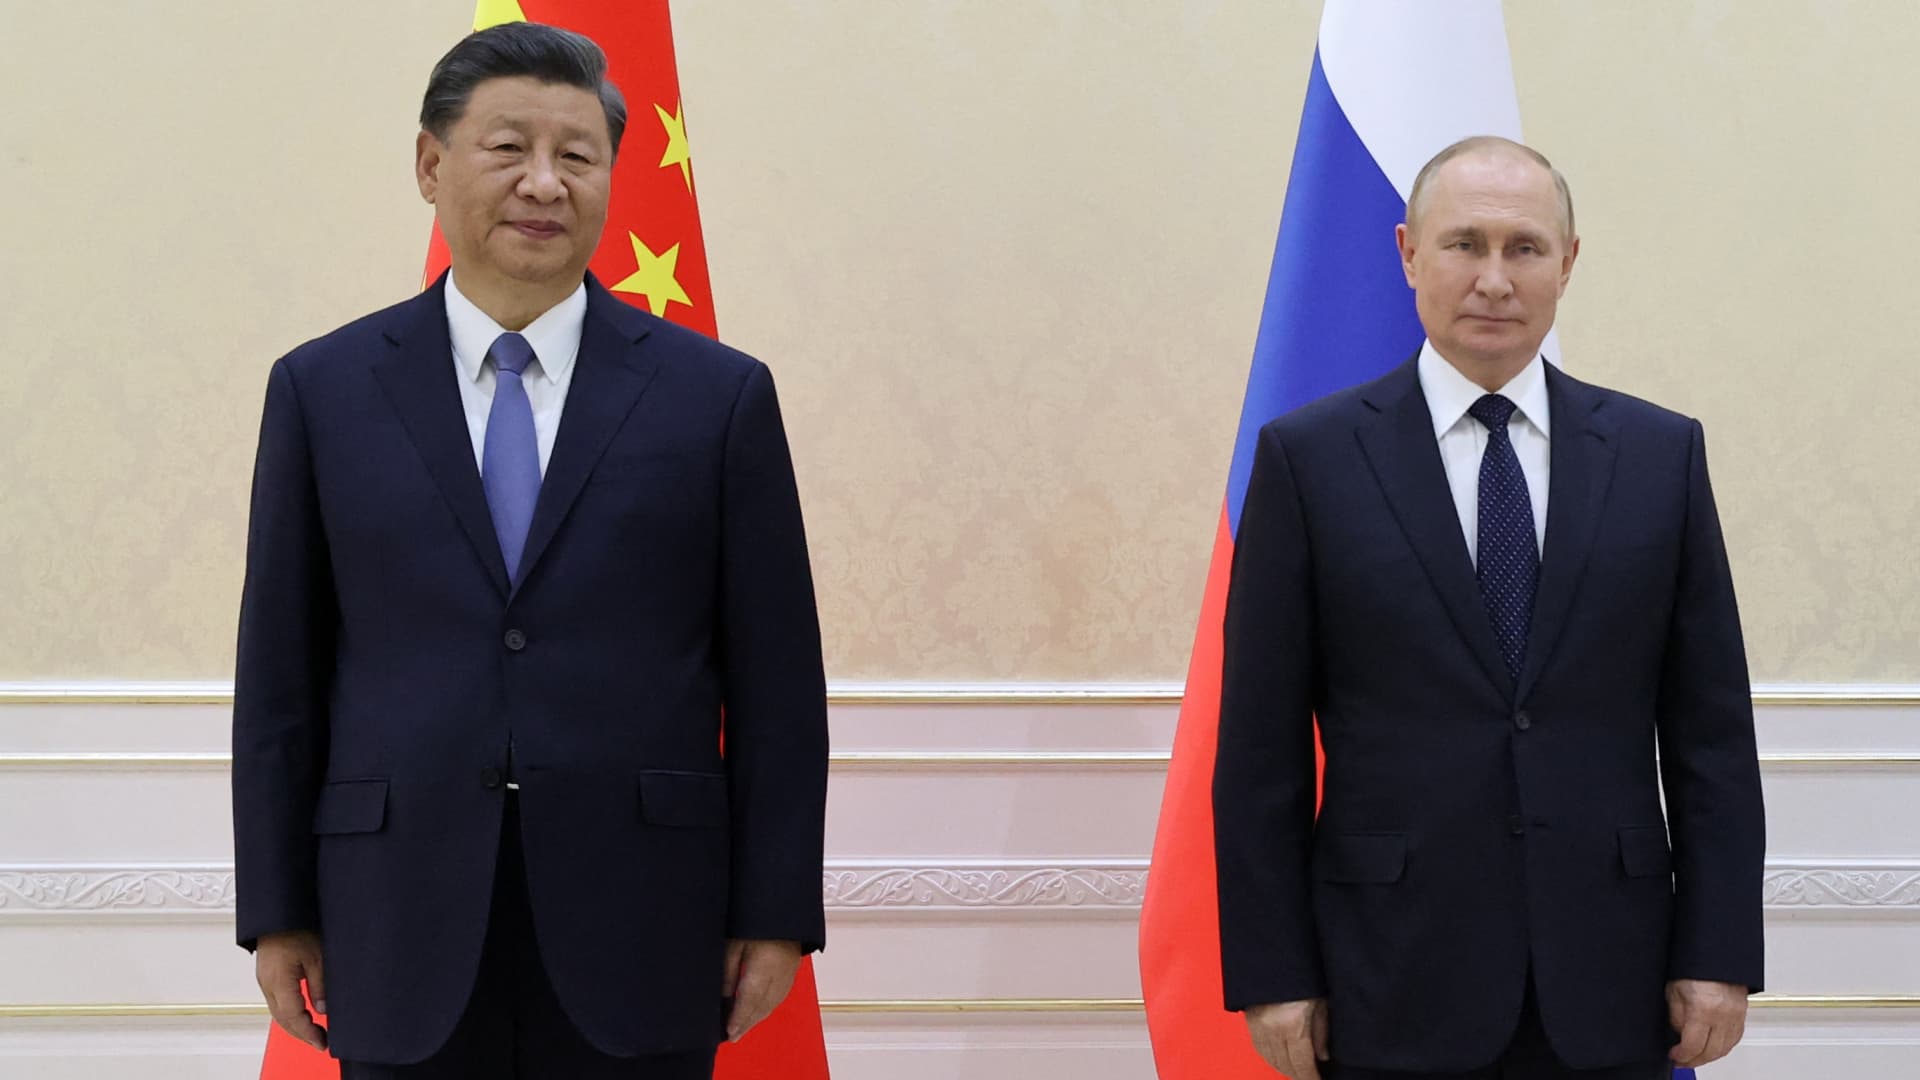 ‘No limits’ relationship between China and Russia has limitations, professor says